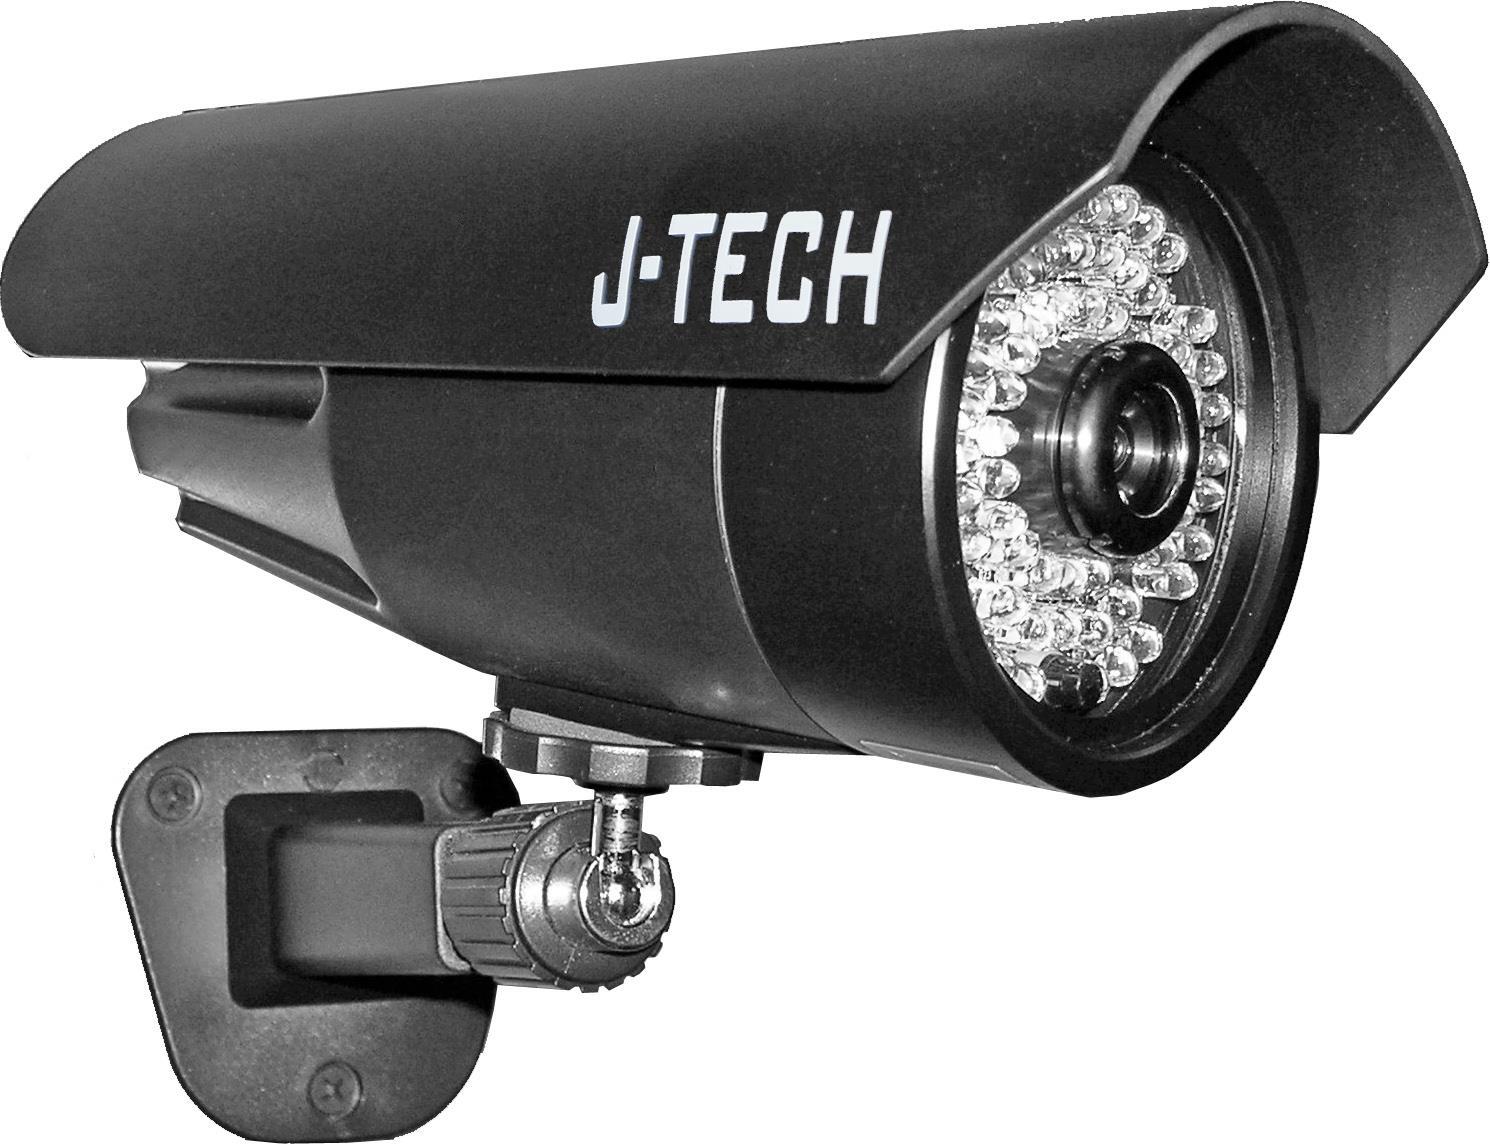 Camera J-TECH JT-880HD